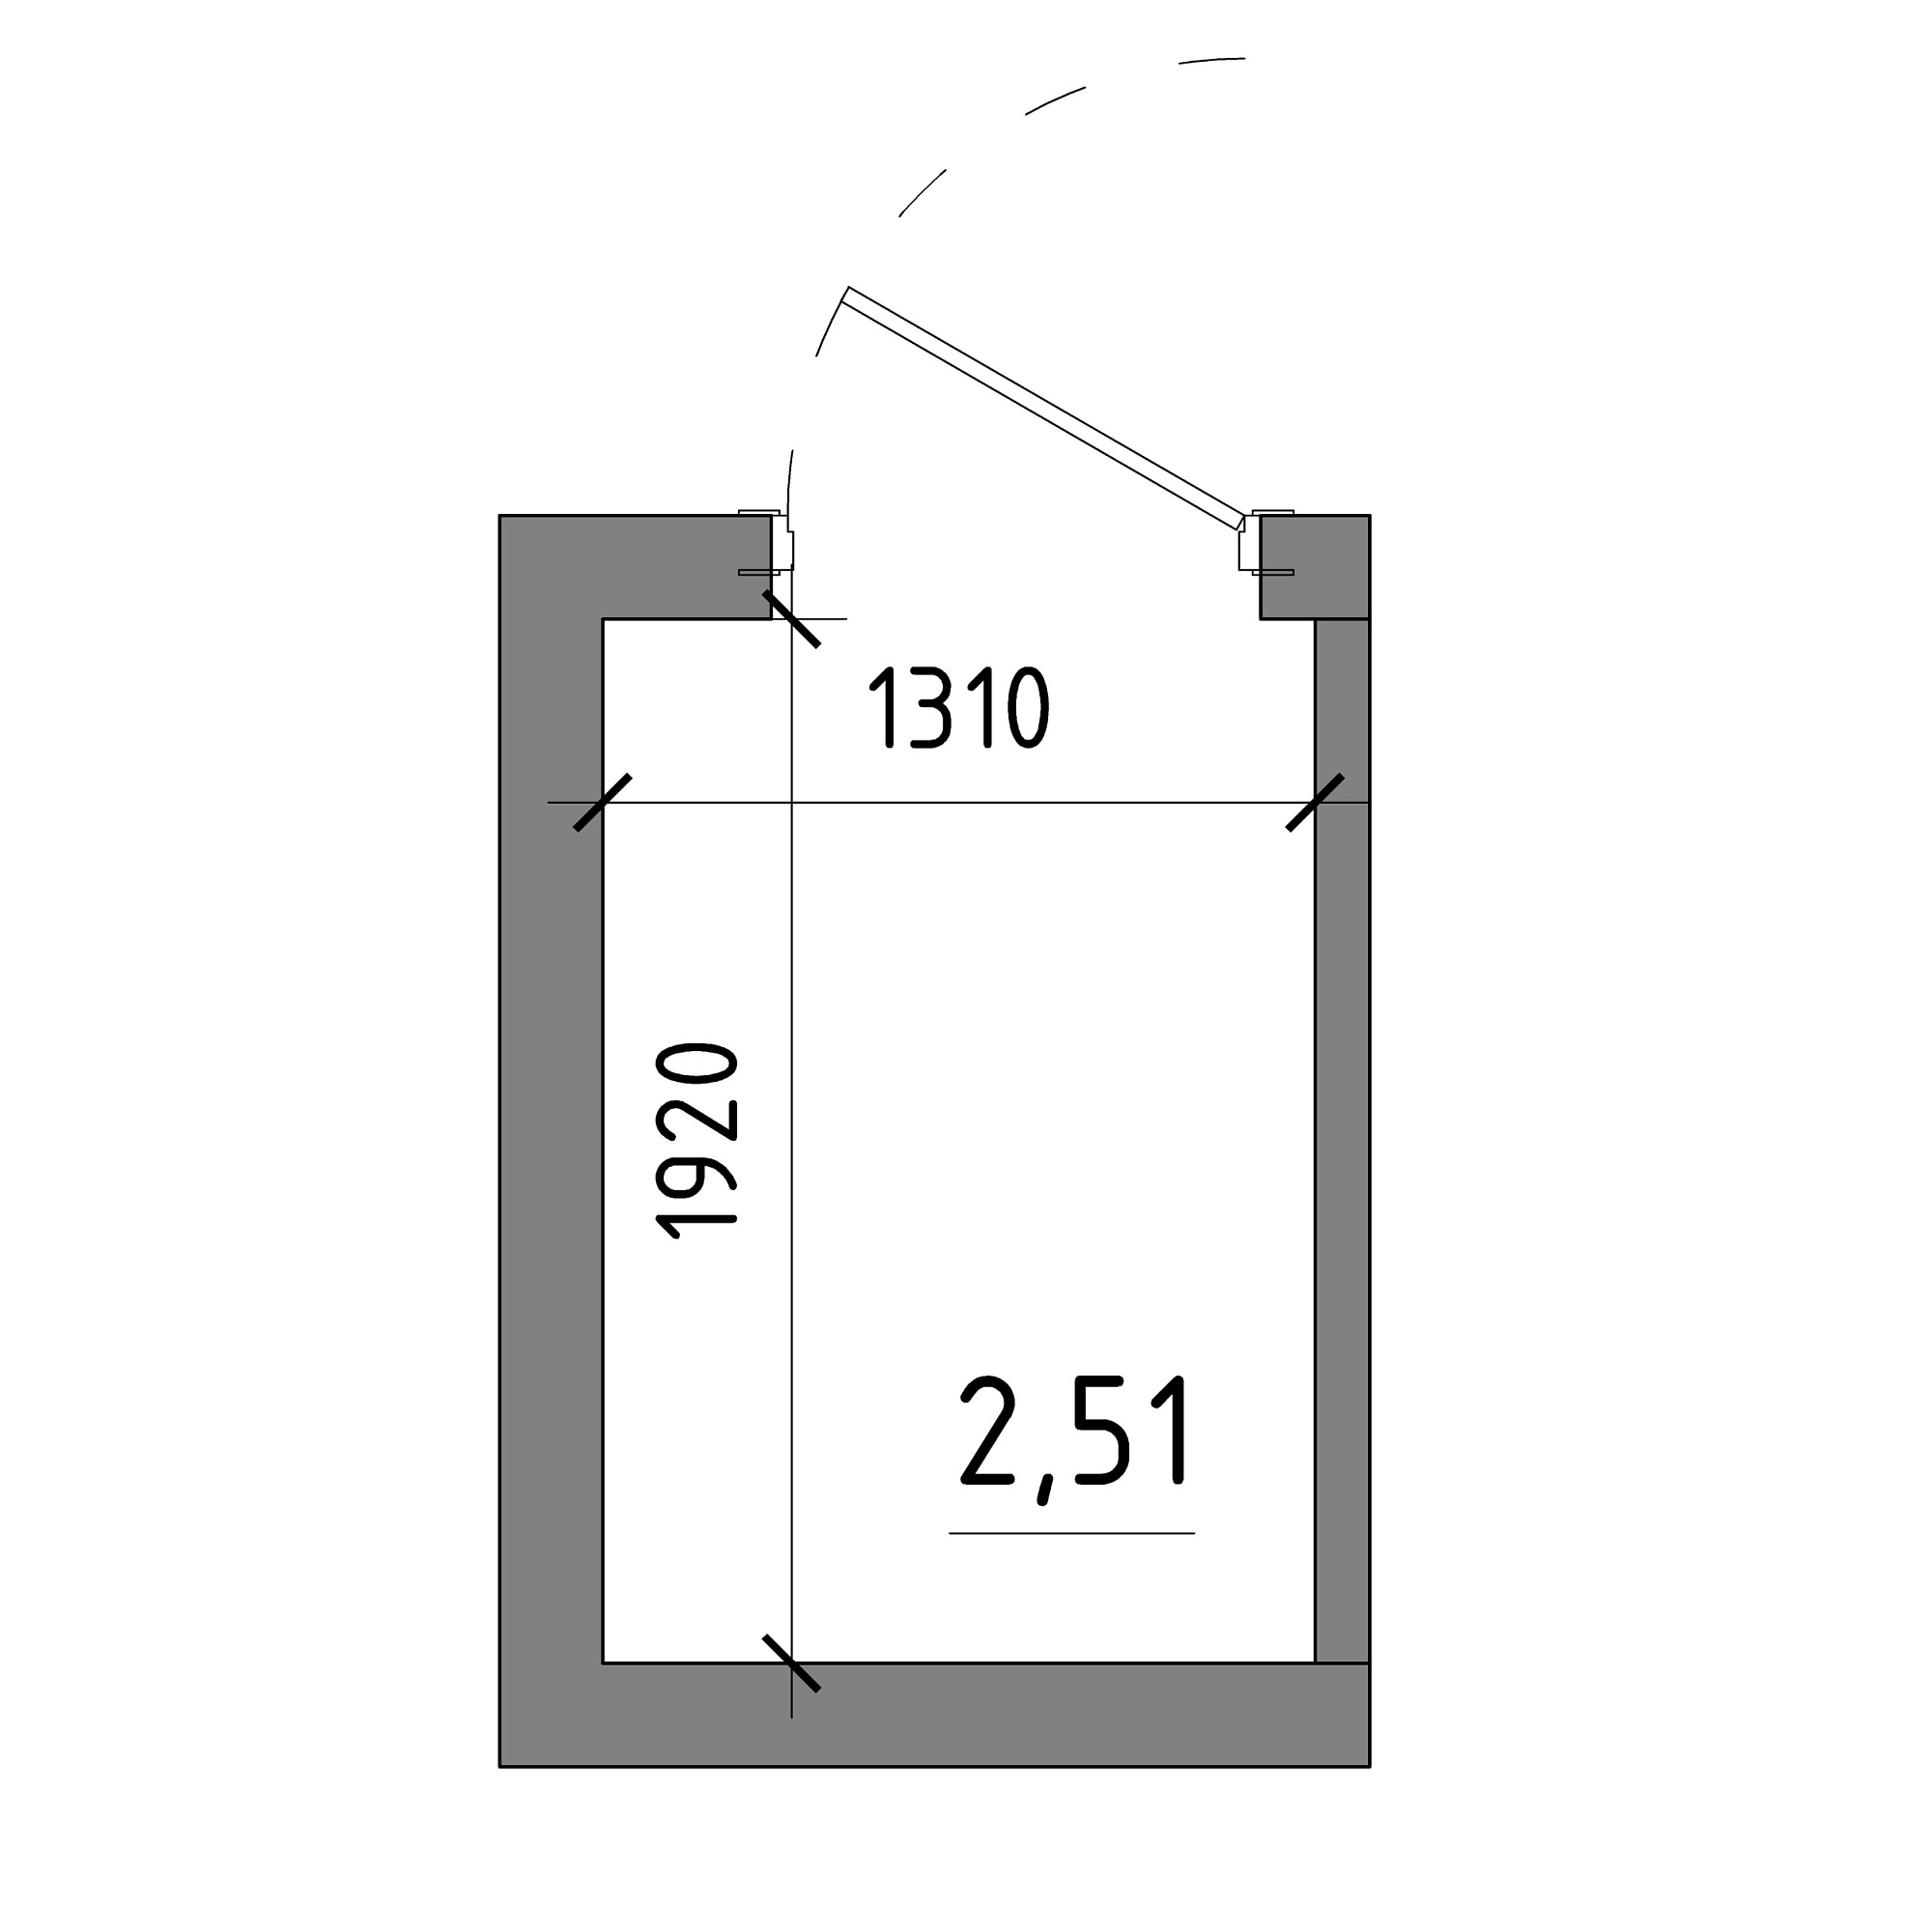 Planning Storeroom area 2.51m2, AB-17-12/К0002.